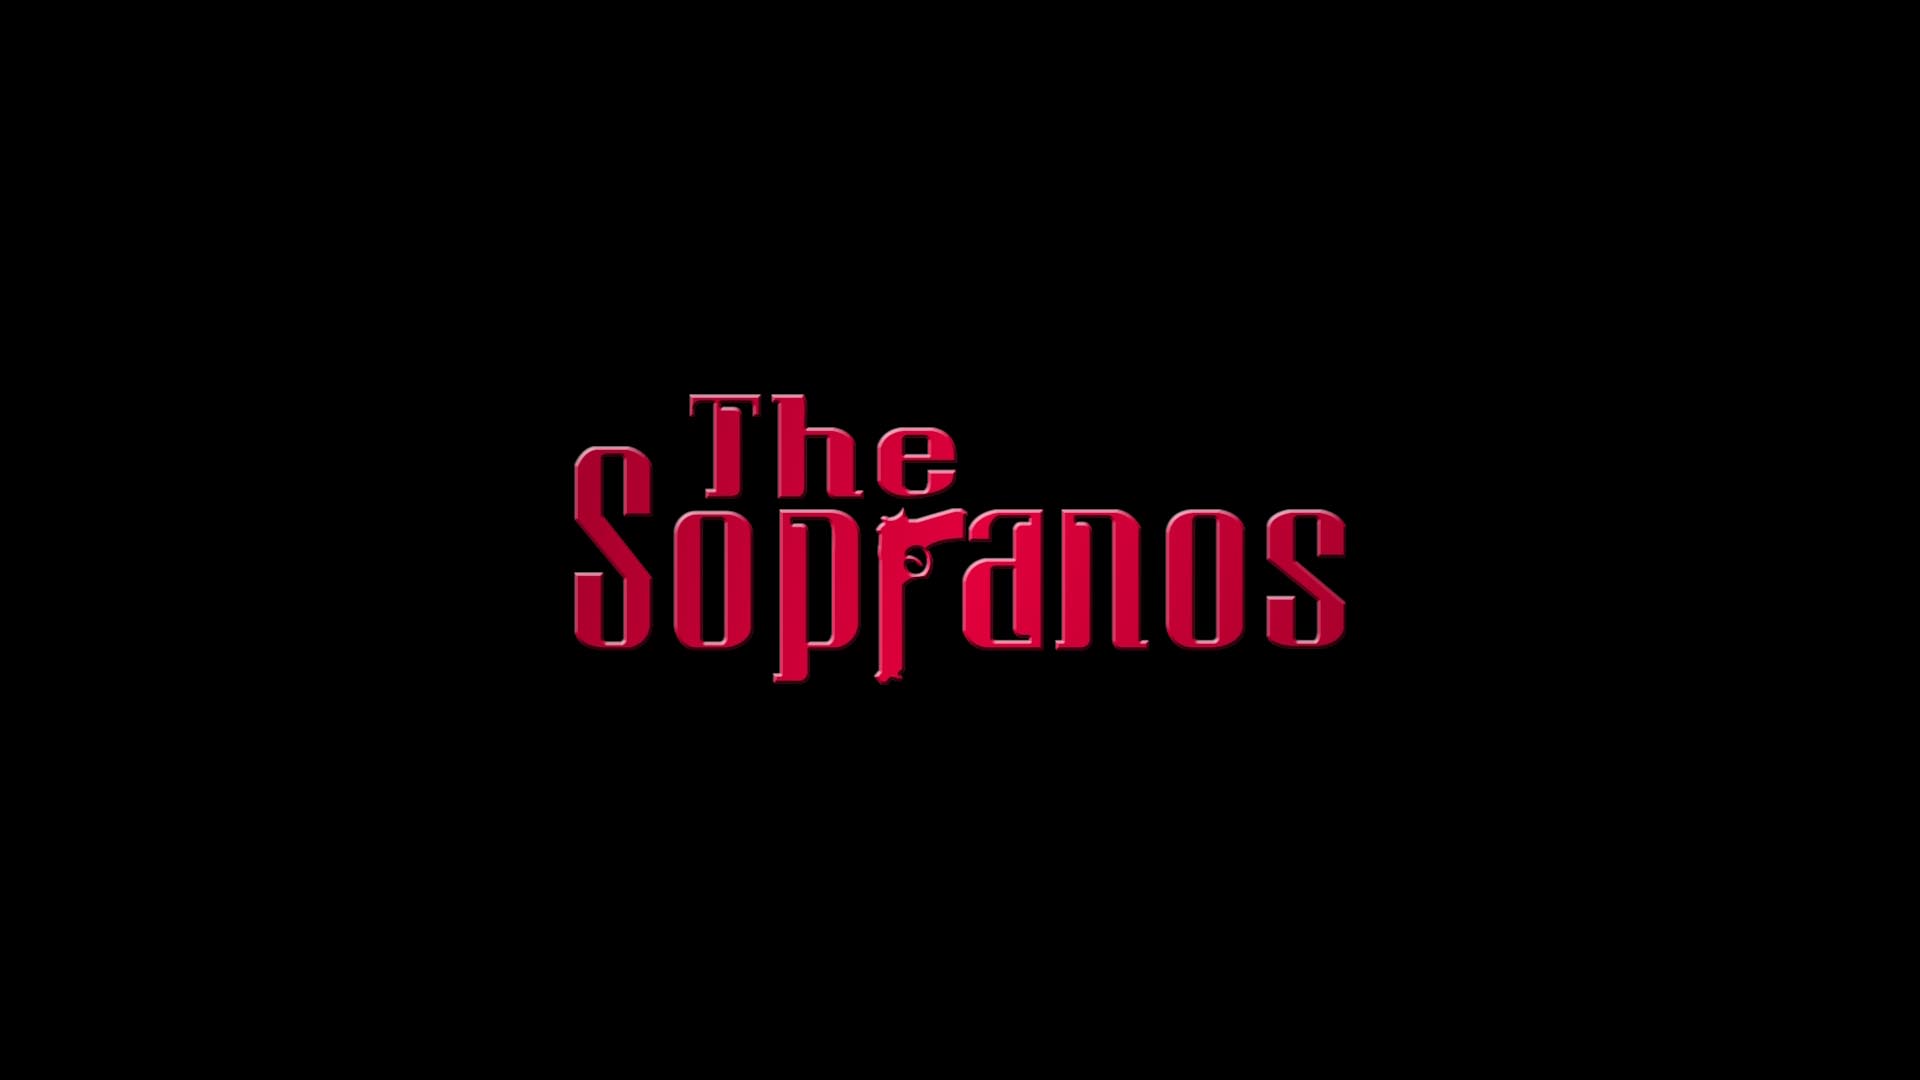 The Sopranos Puter Wallpaper Desktop Background Id